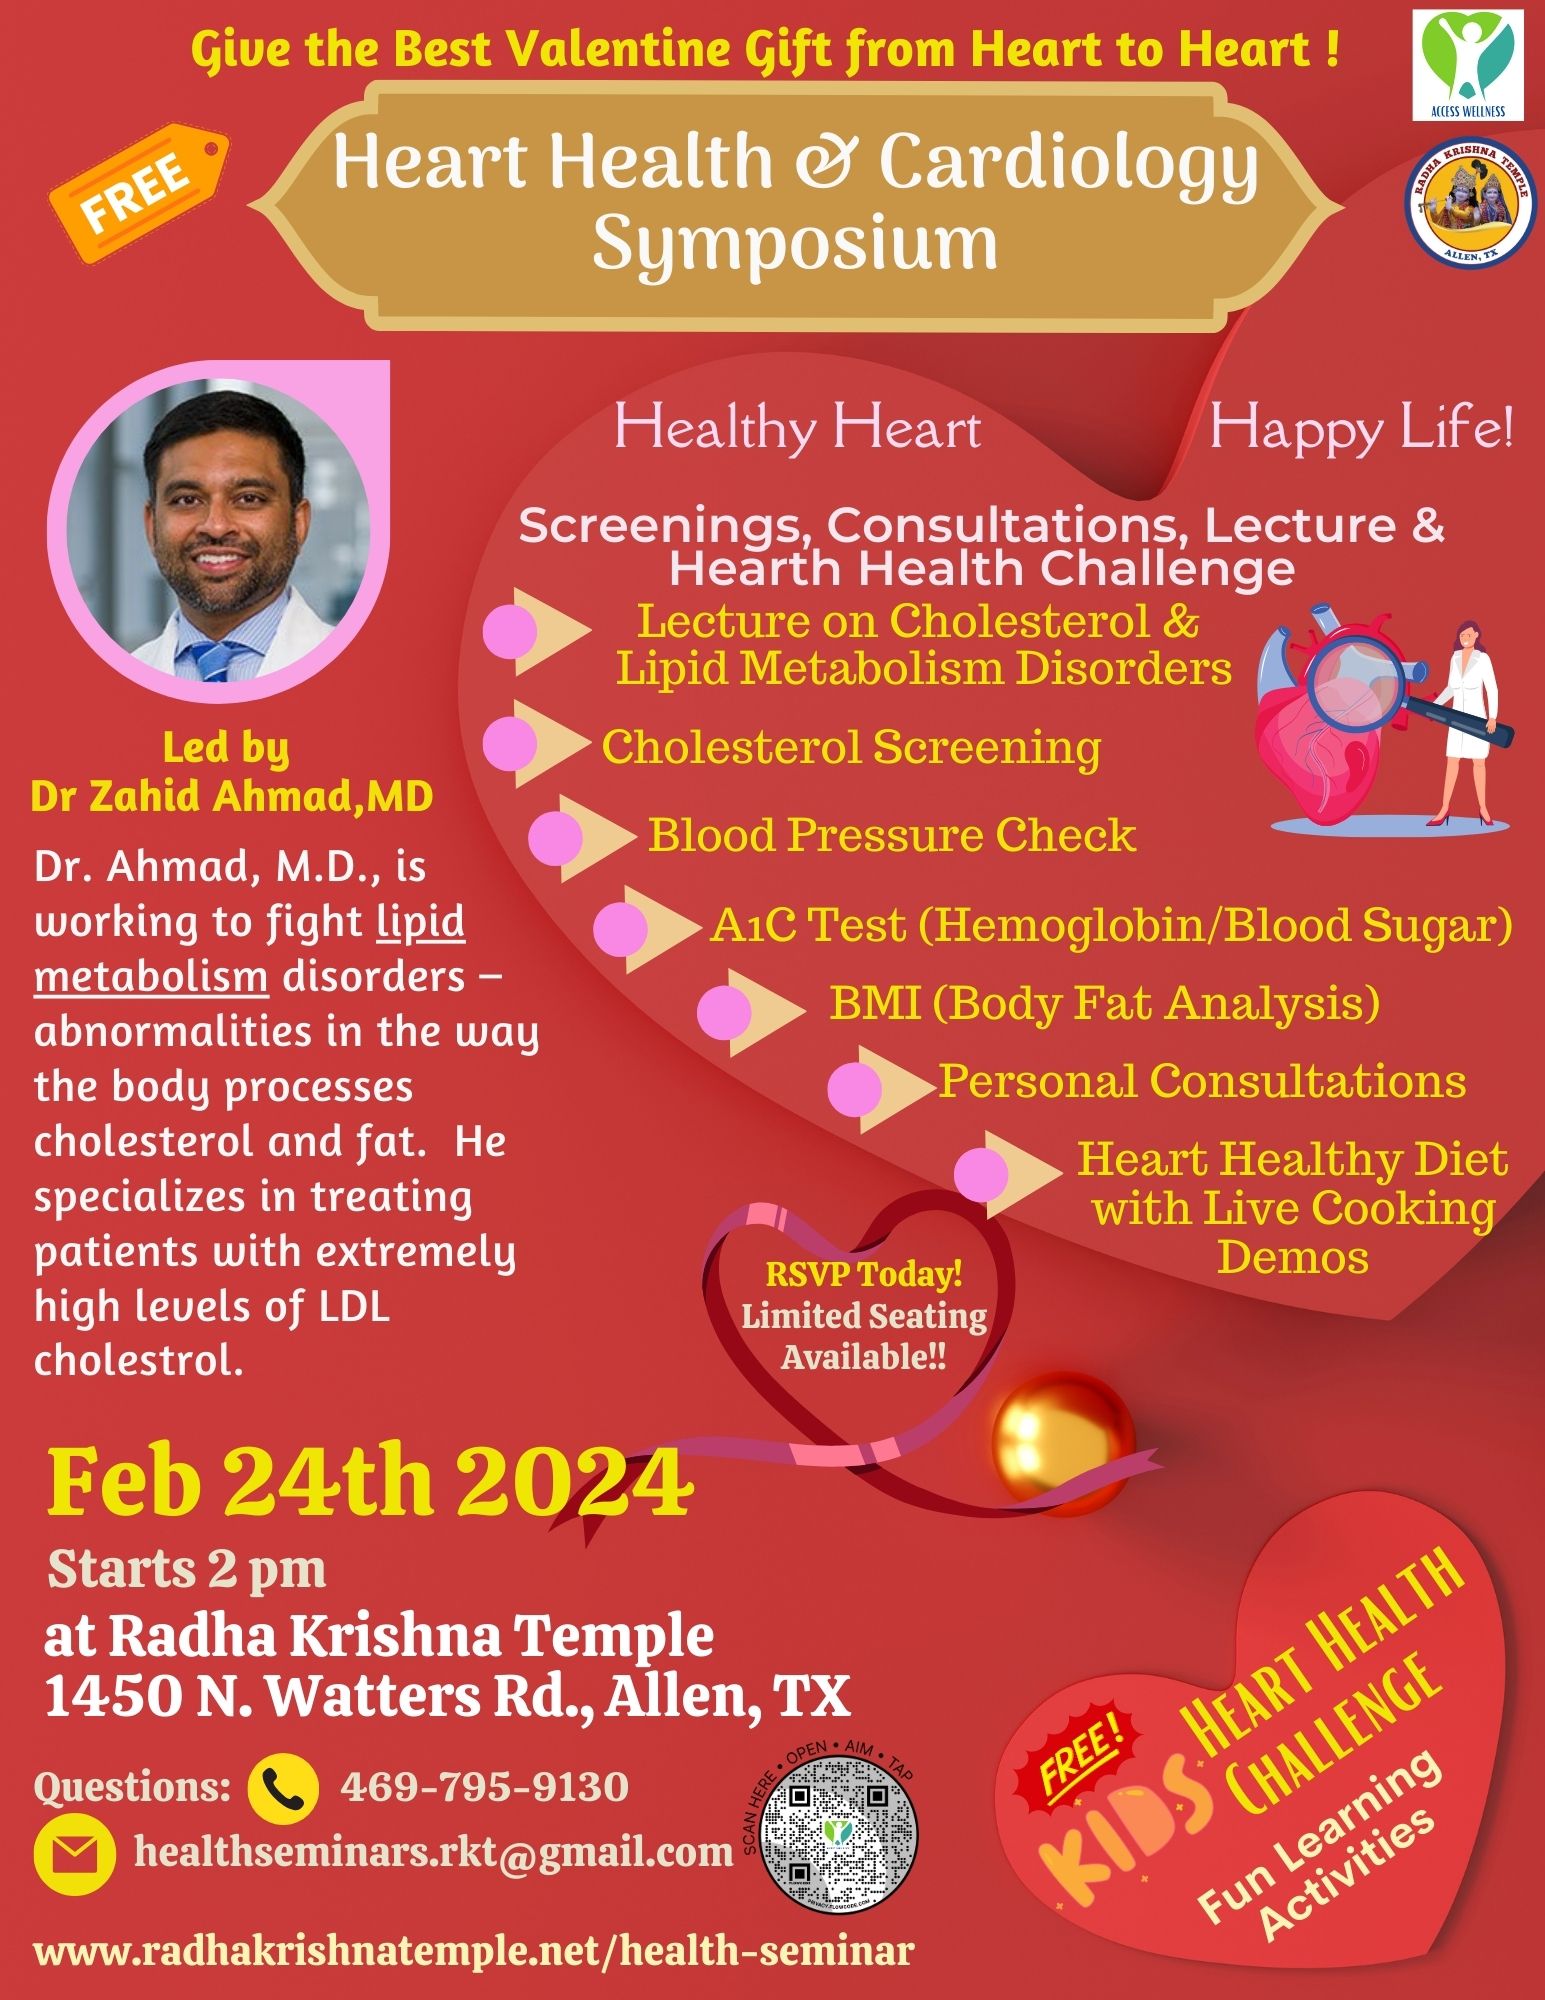 Free Family Heart Health & Cardiology Symposium 